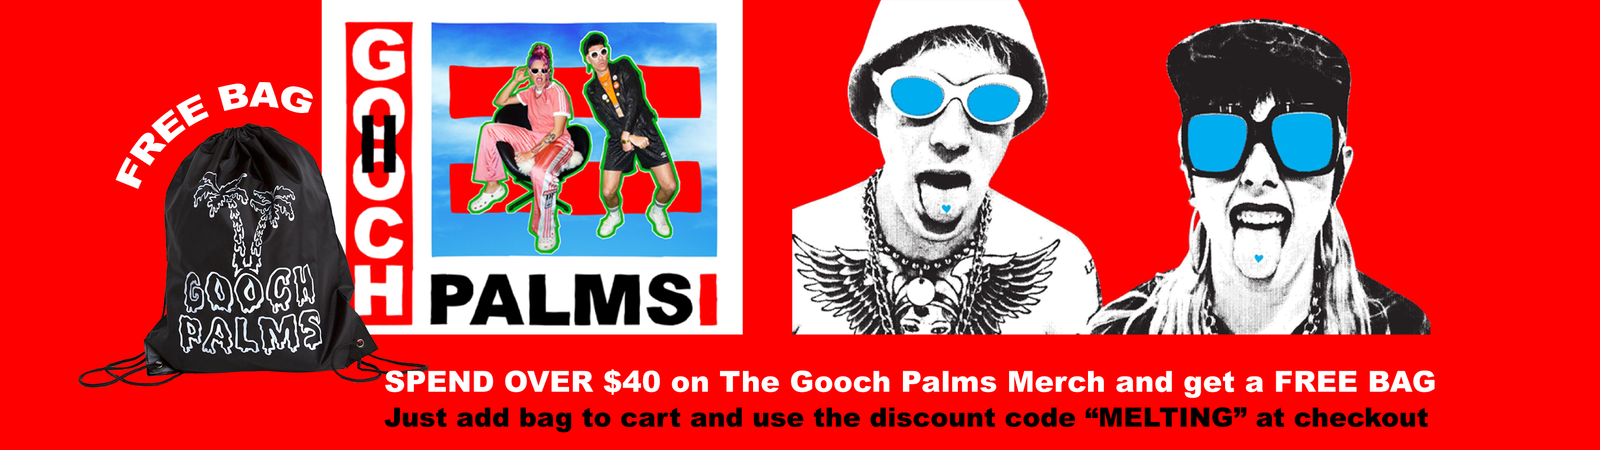 The Gooch Palms